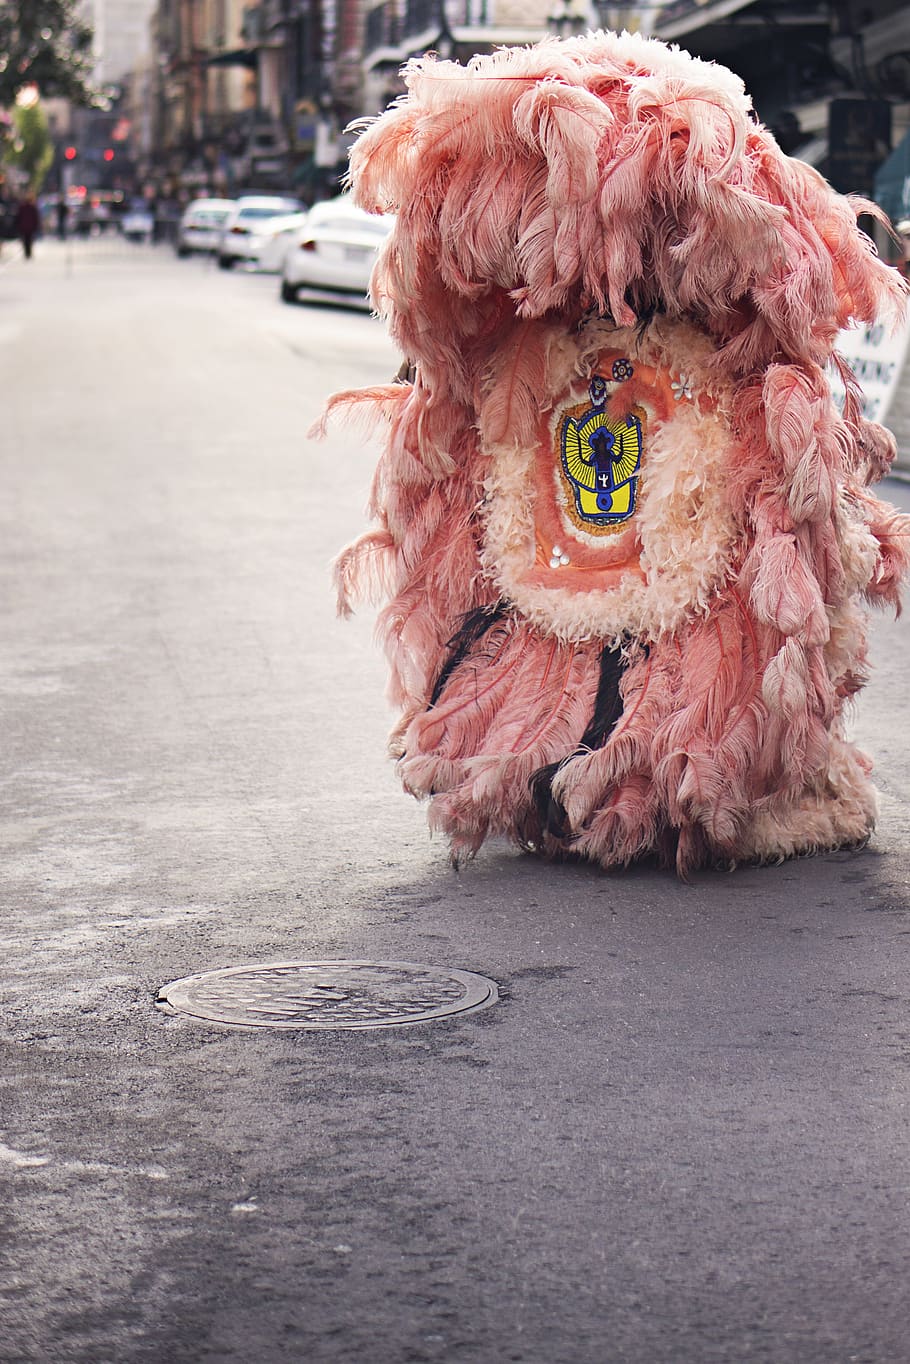 pink, costume, fur, street, pavement, manhole, city, focus on foreground, day, animal